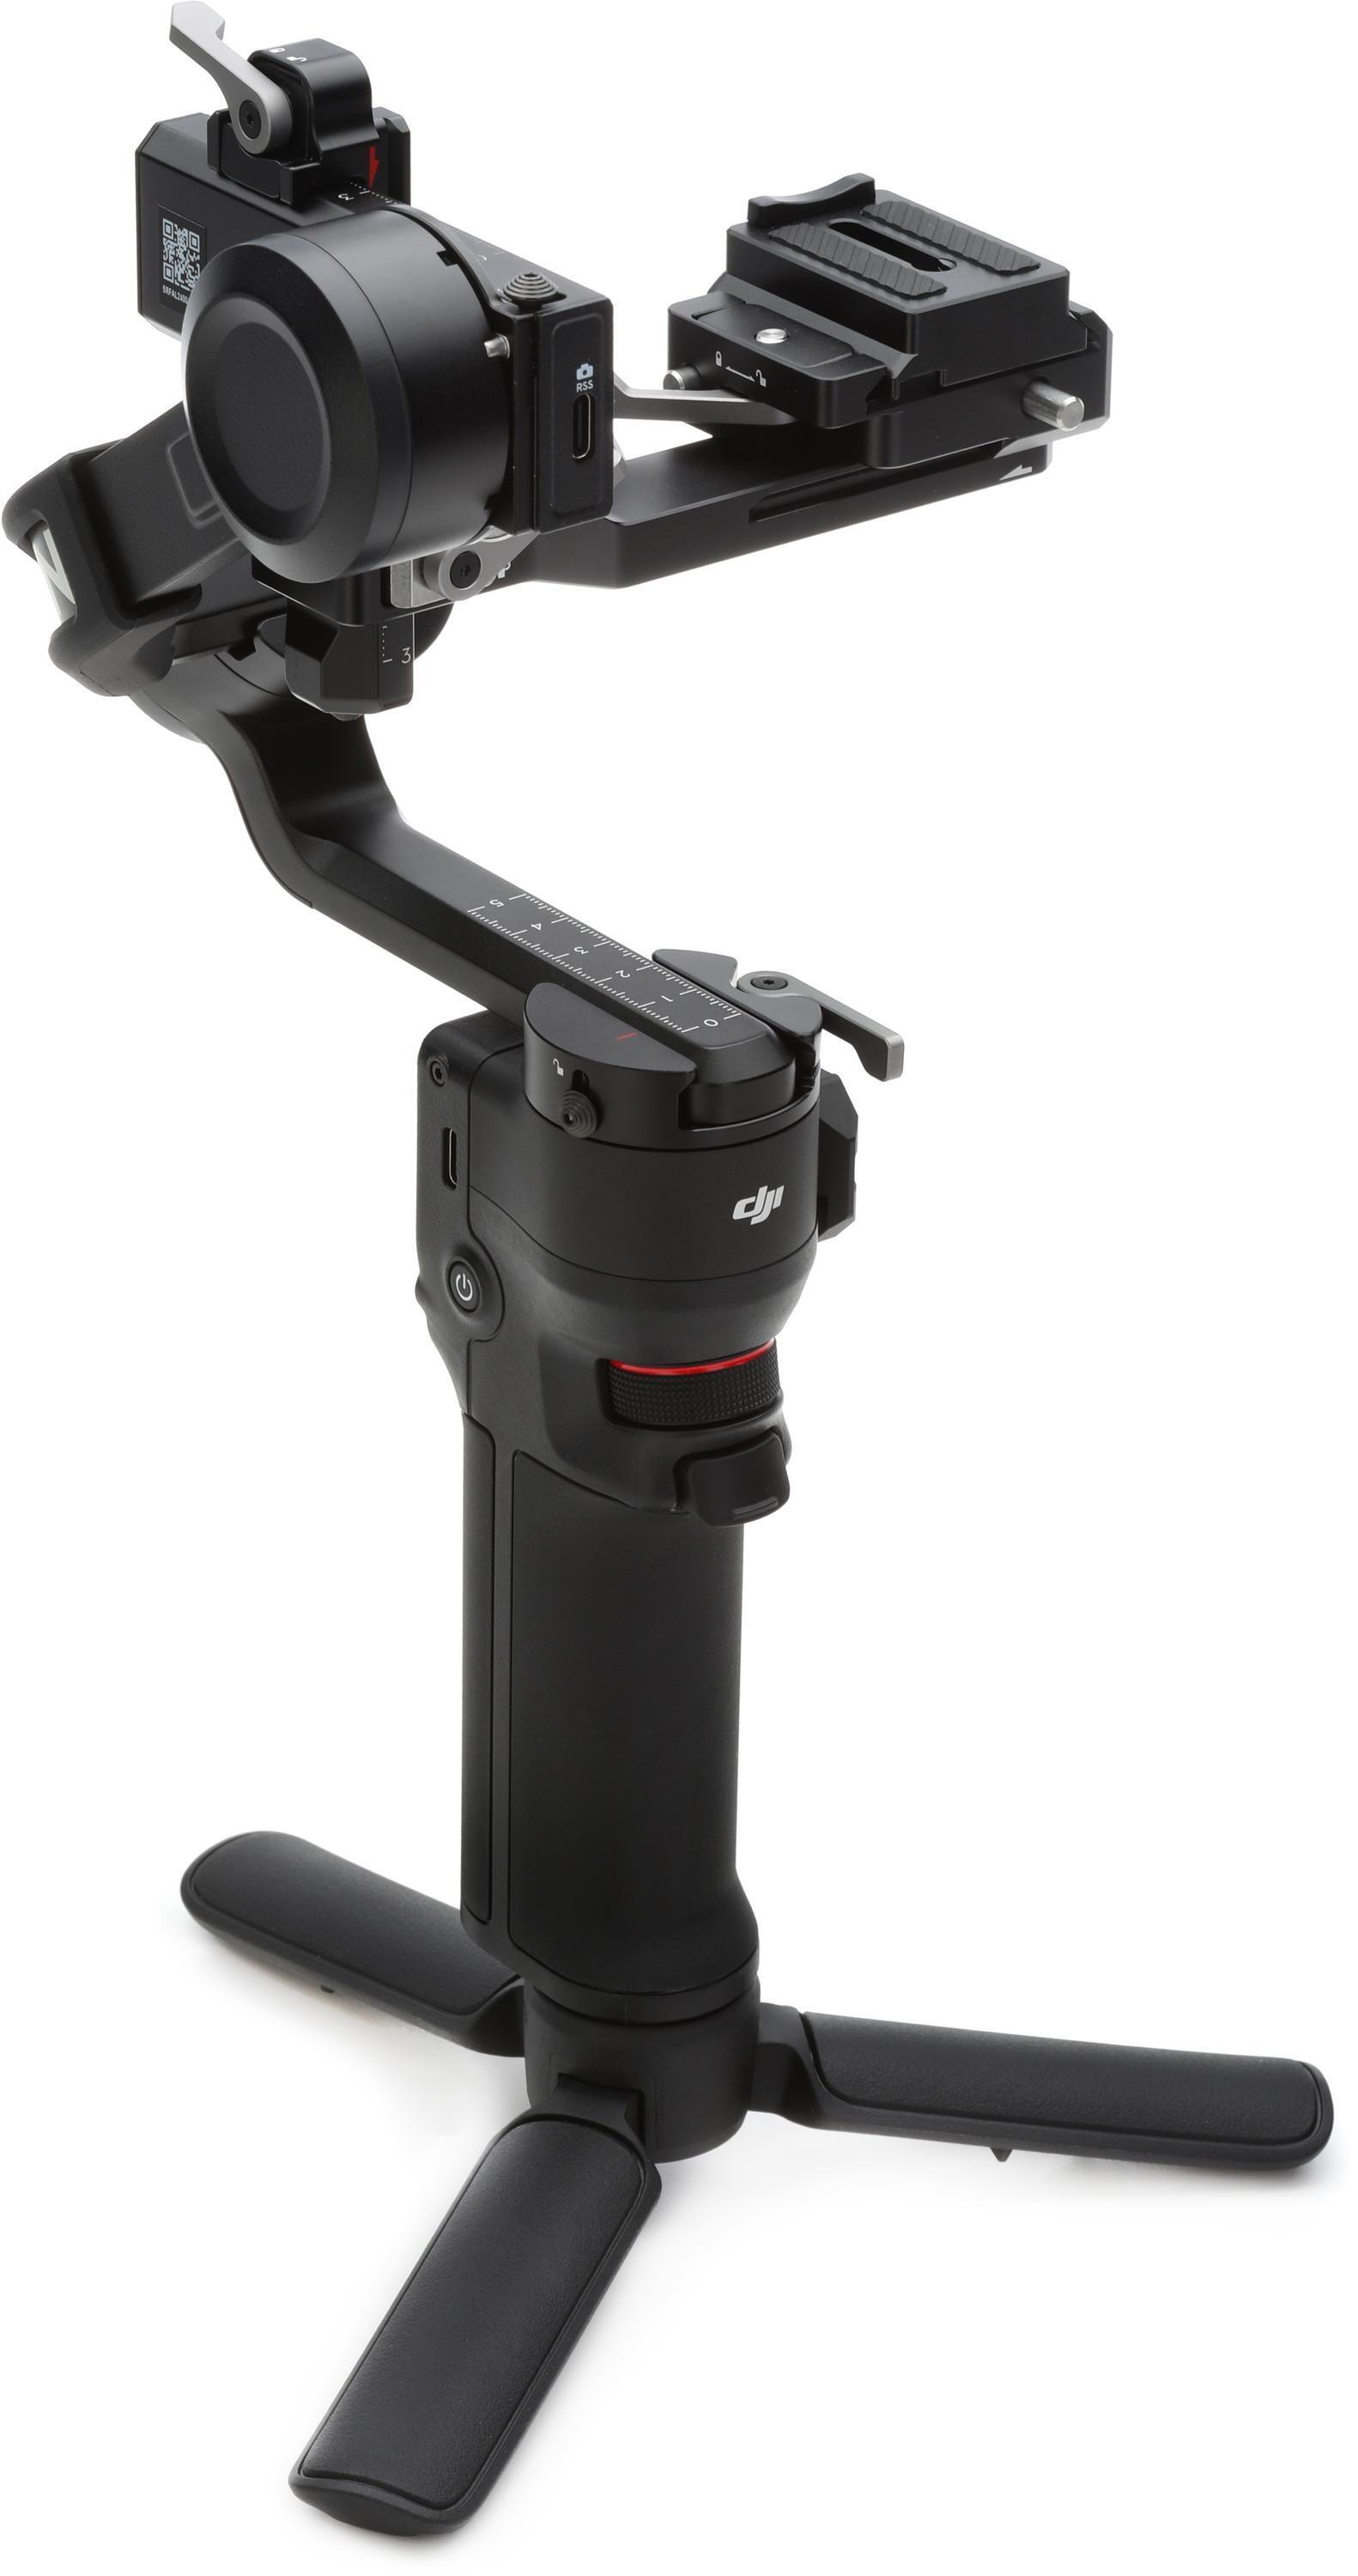 DJI RS 3 Mini Gimbal Stabilizer - The Camera Exchange